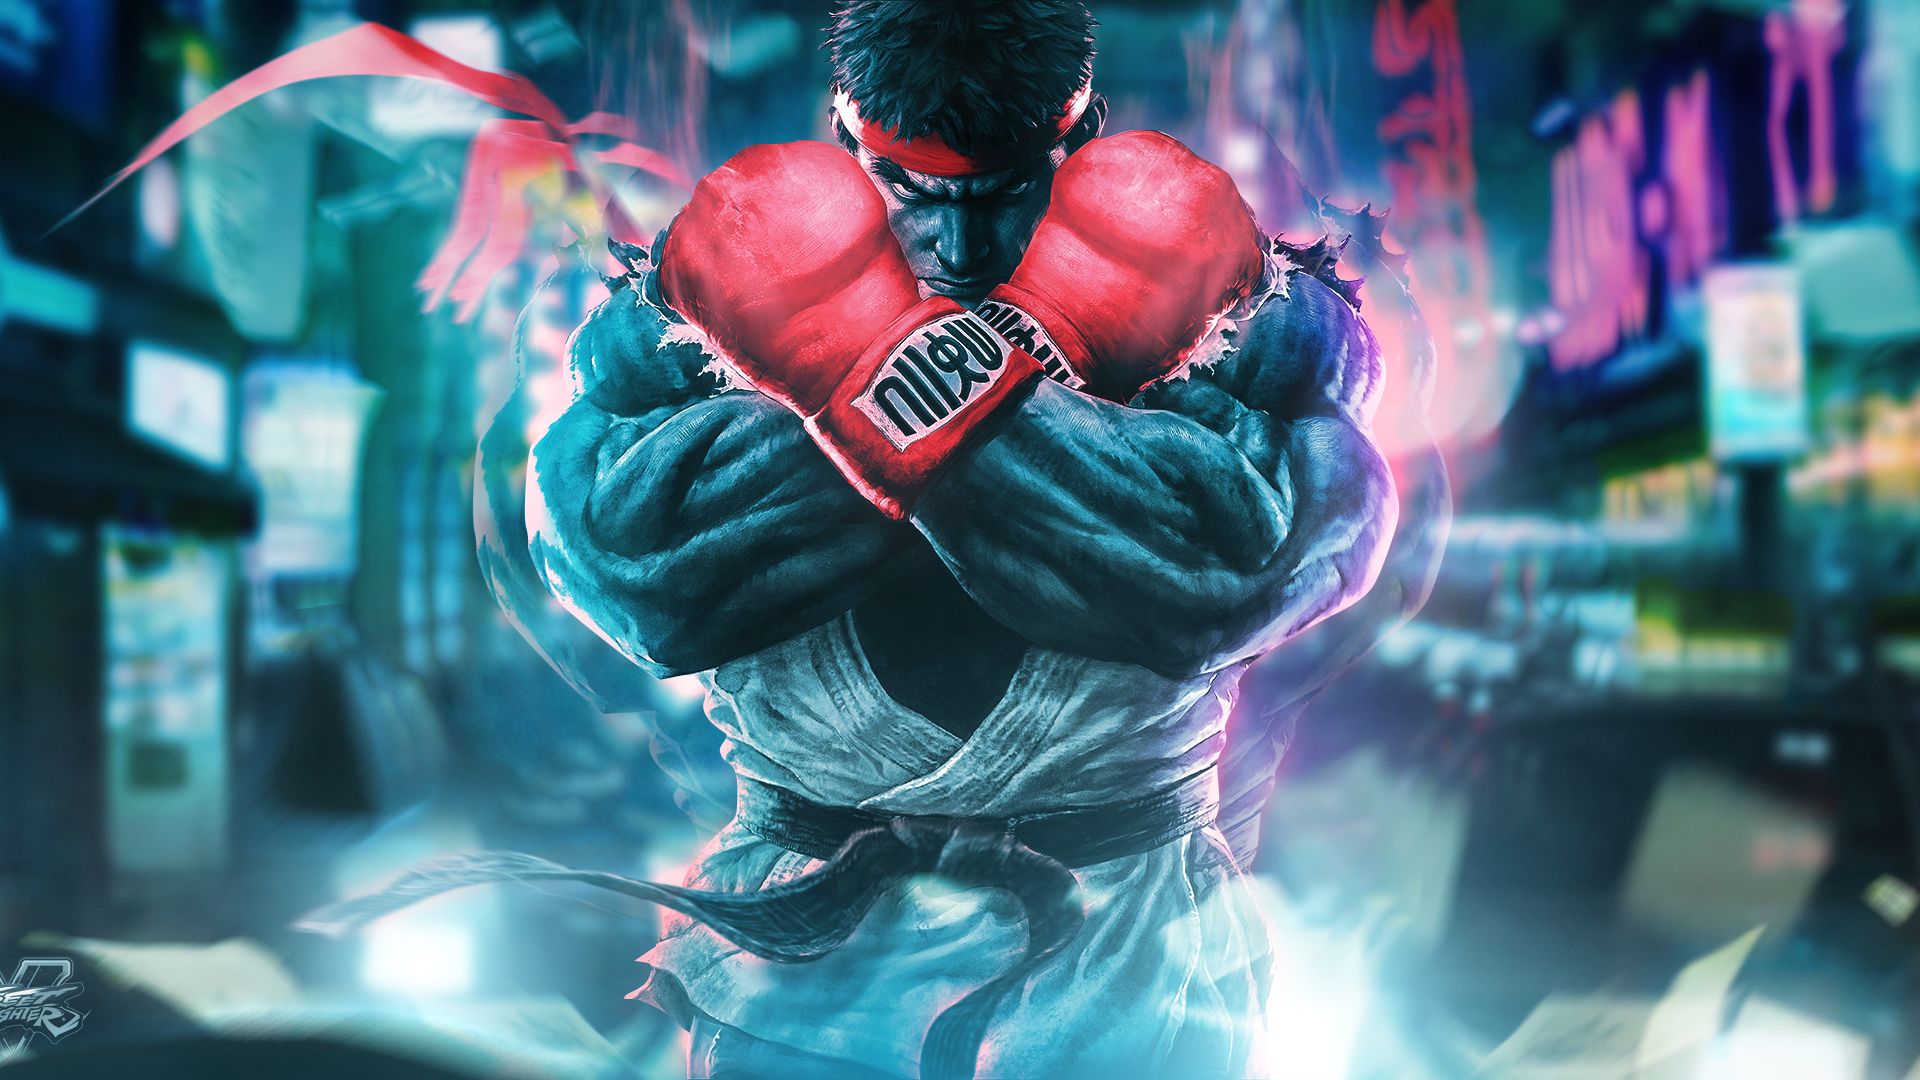 Wallpaper Ryu, Street Fighter gaming